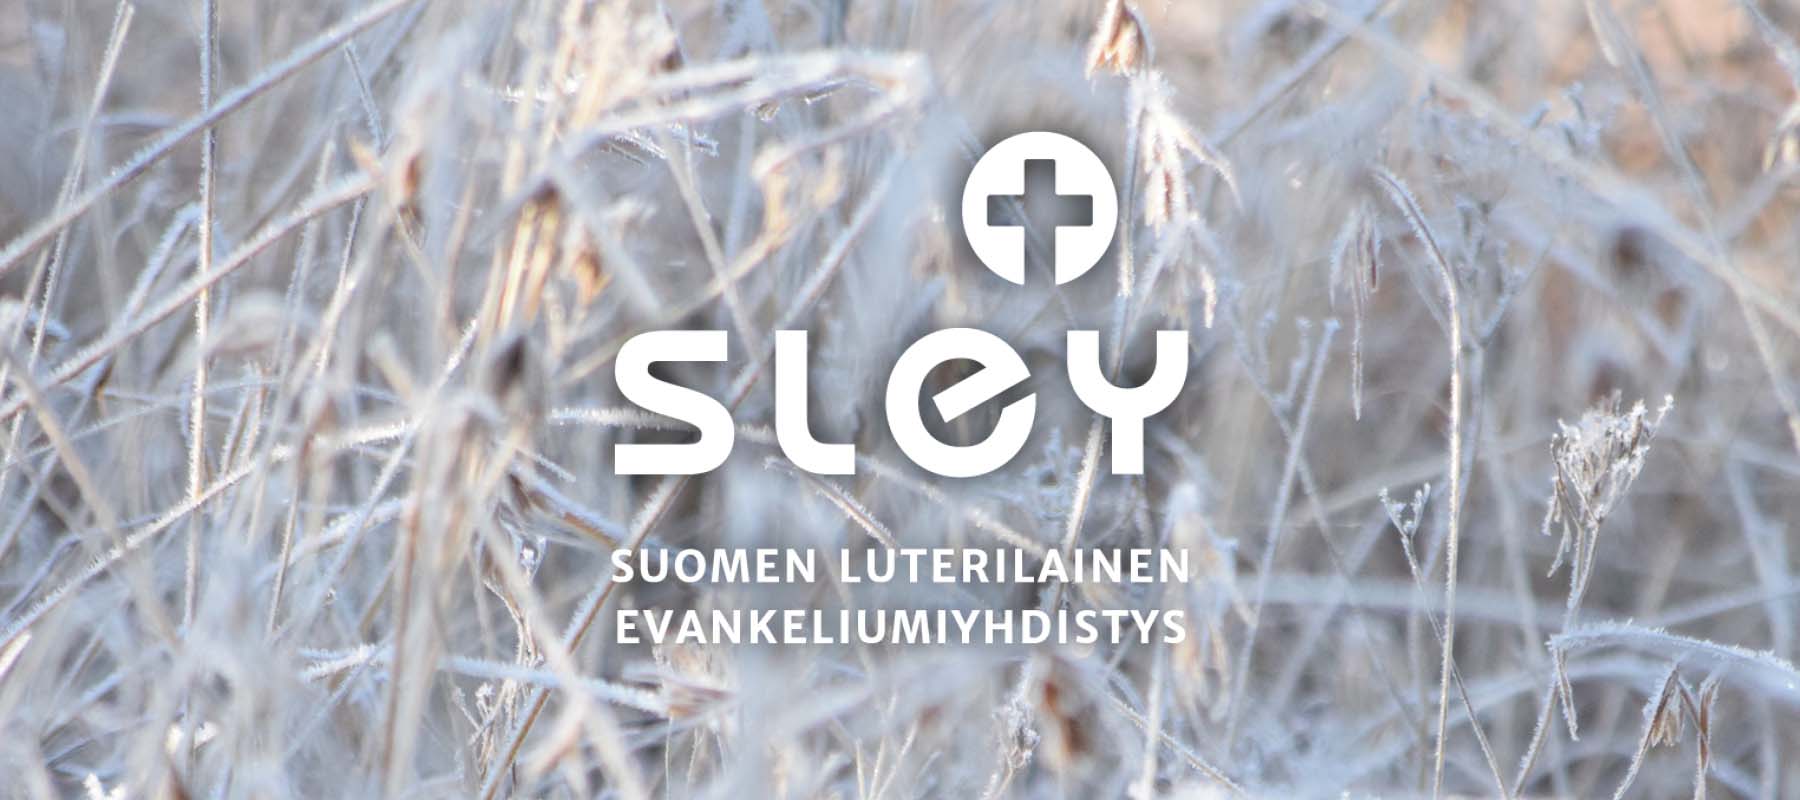 Sley Suomen Luterilainen Evankeliumiyhdistys -logo